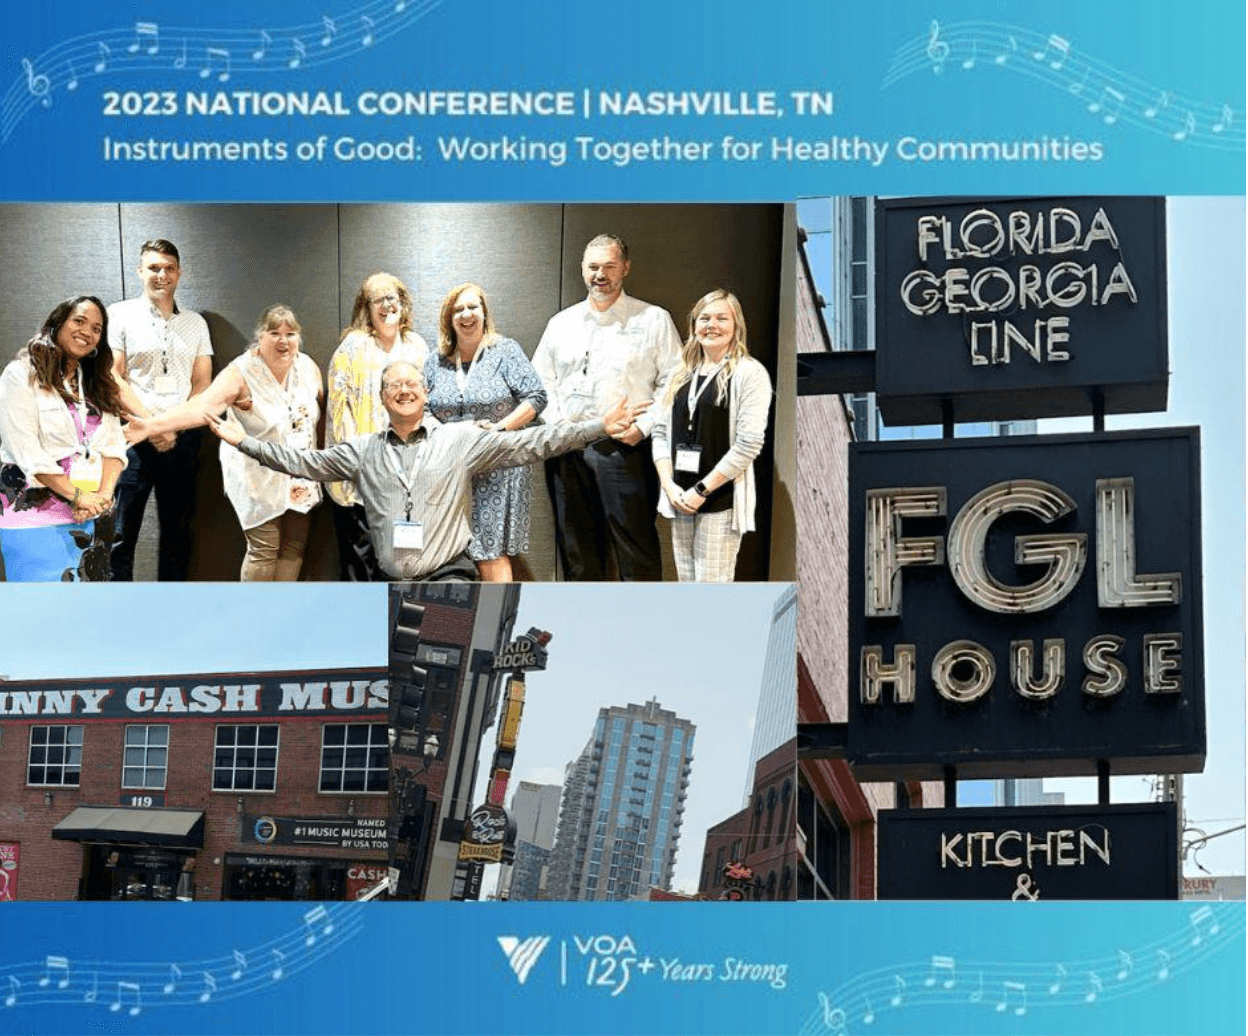 2023 national conference in Nashville, TN